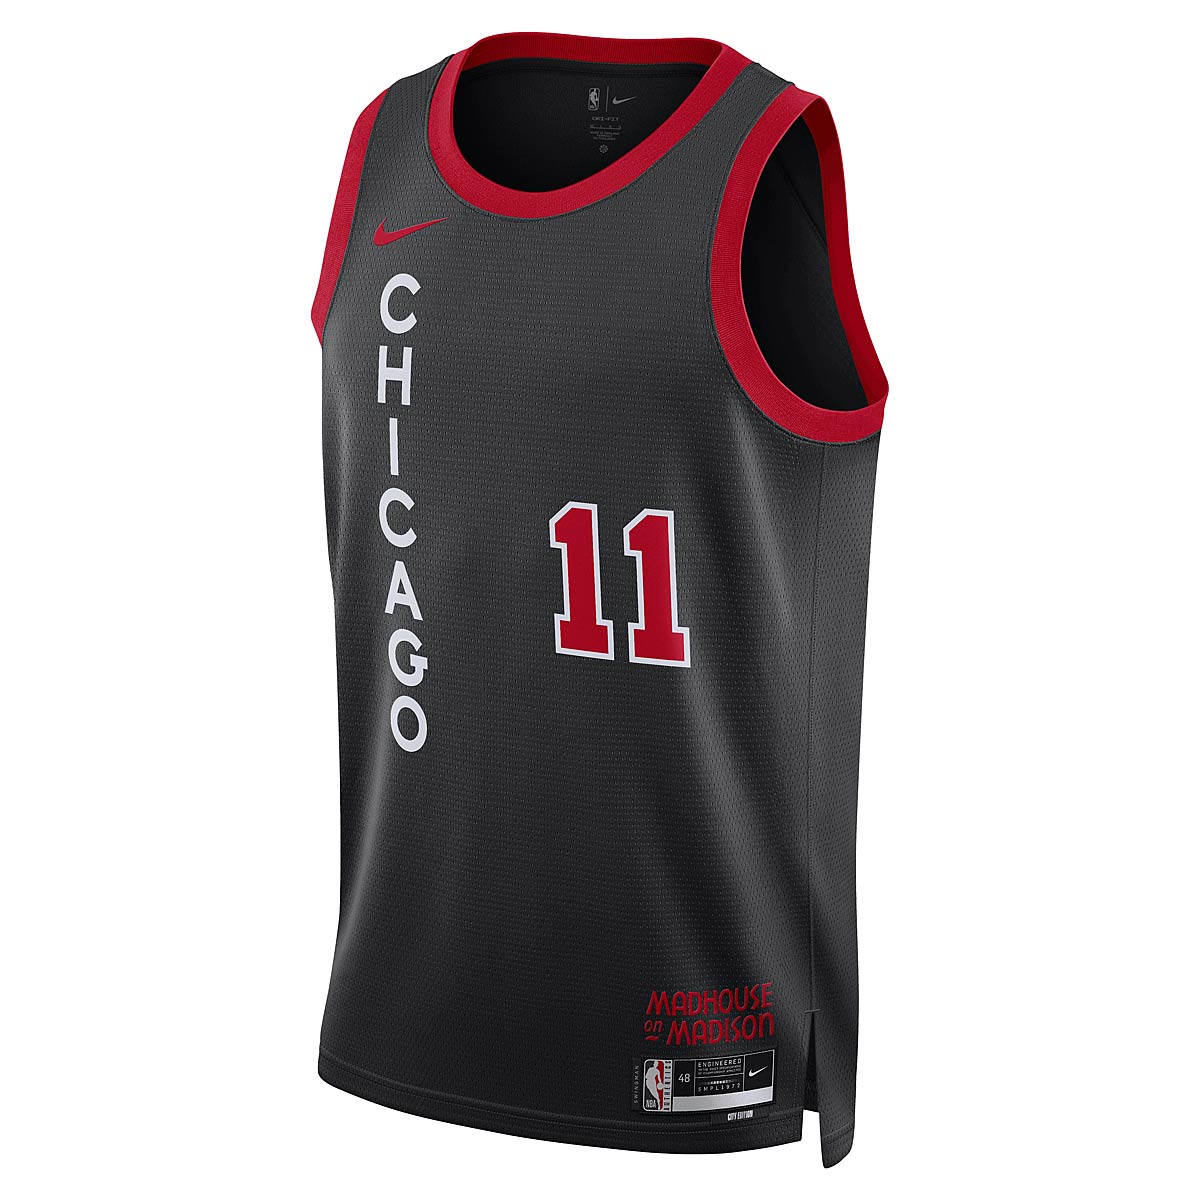 Nike NBA Chicago Bulls Dri-fit City Edition Swingman Jersey Demar Derozan, Schwarz/university Rot/schwarz XL